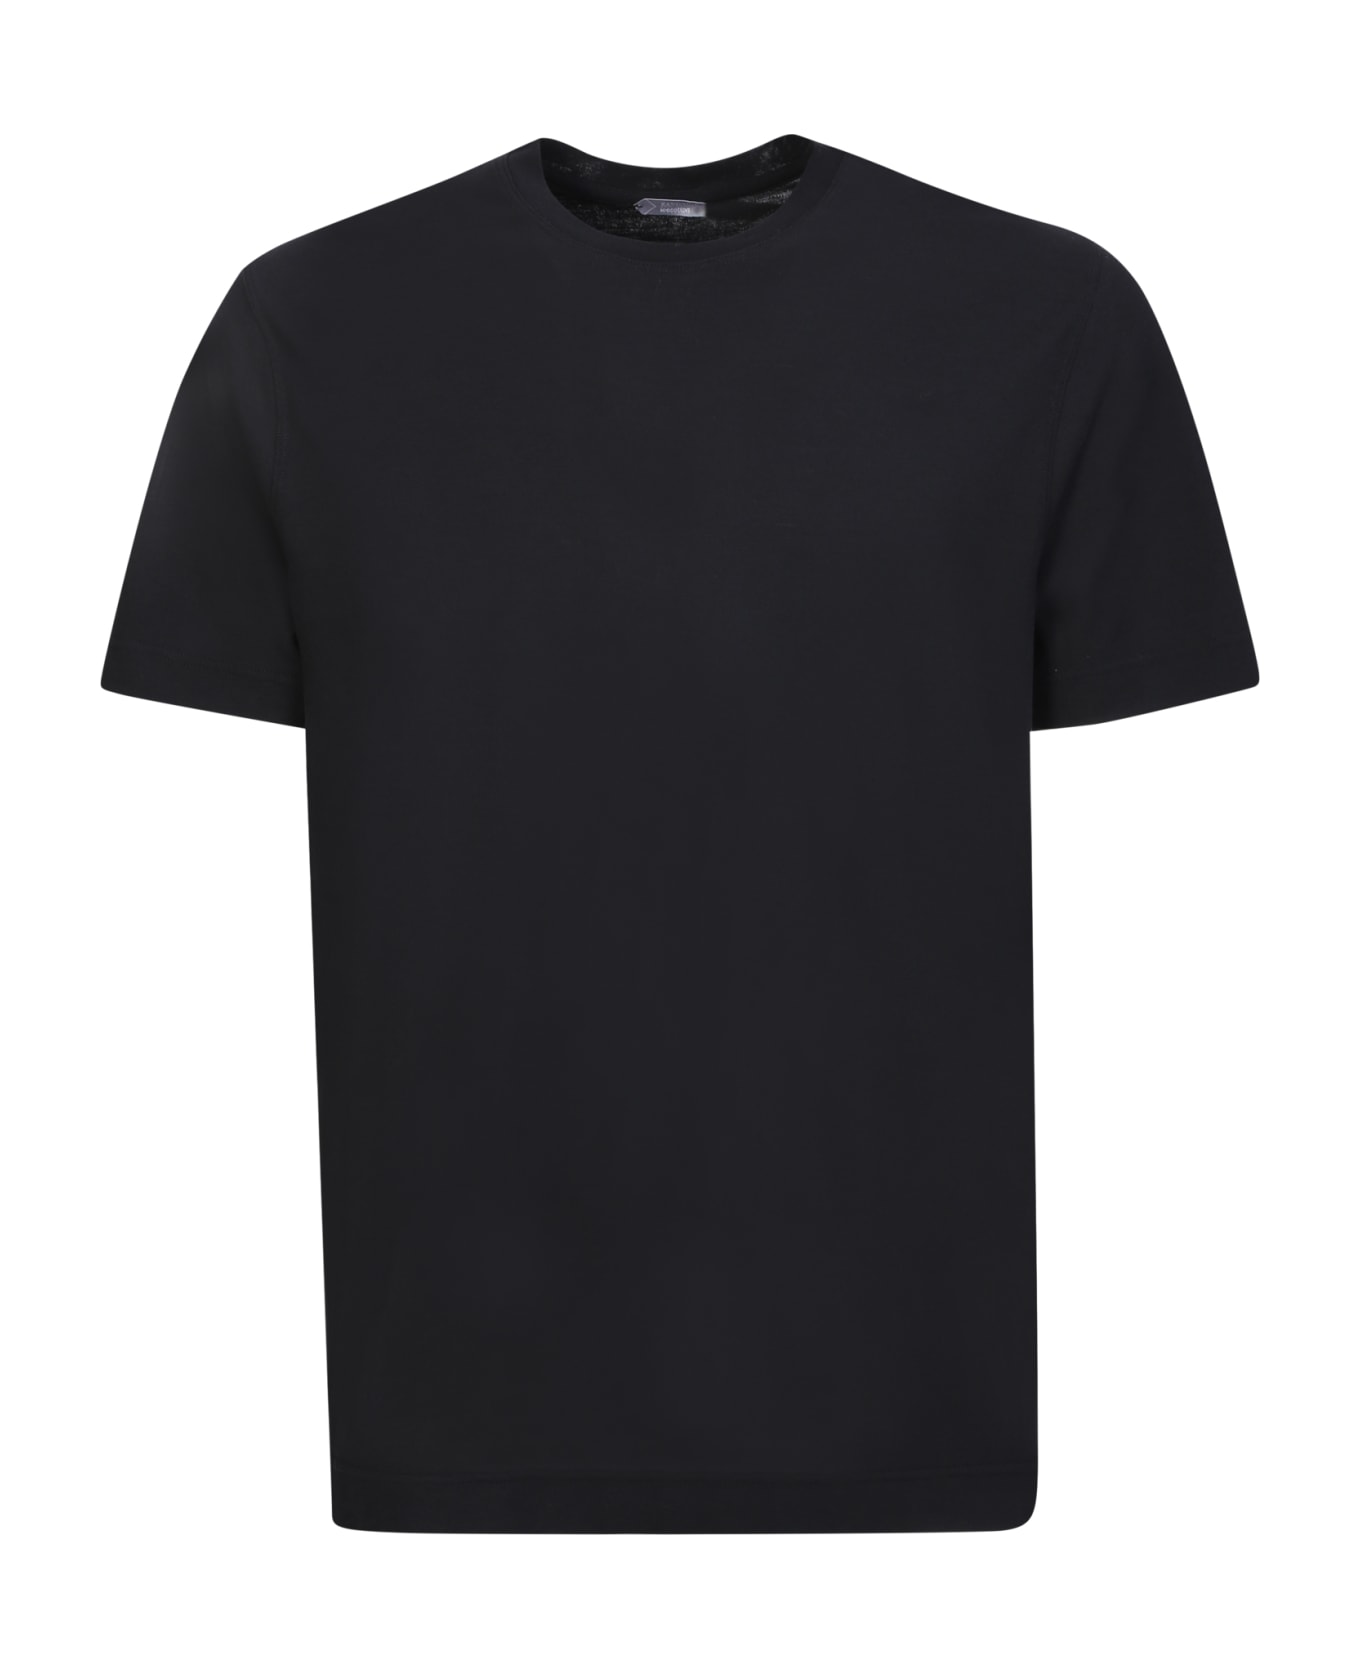 Zanone Black Cotton T-shirt - Black